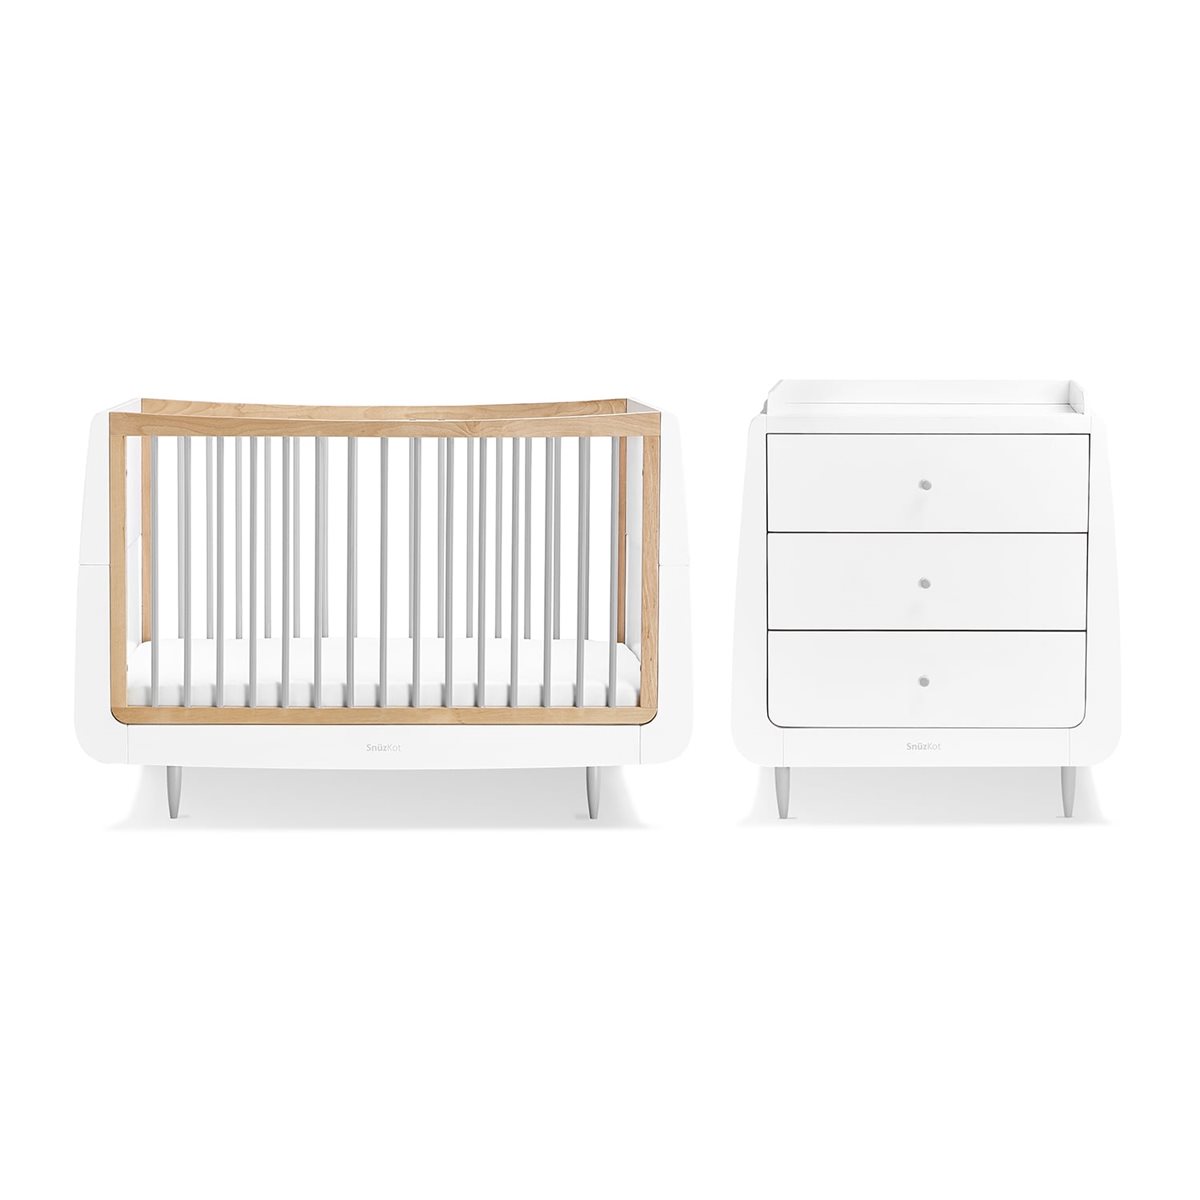 baby furniture sets uk